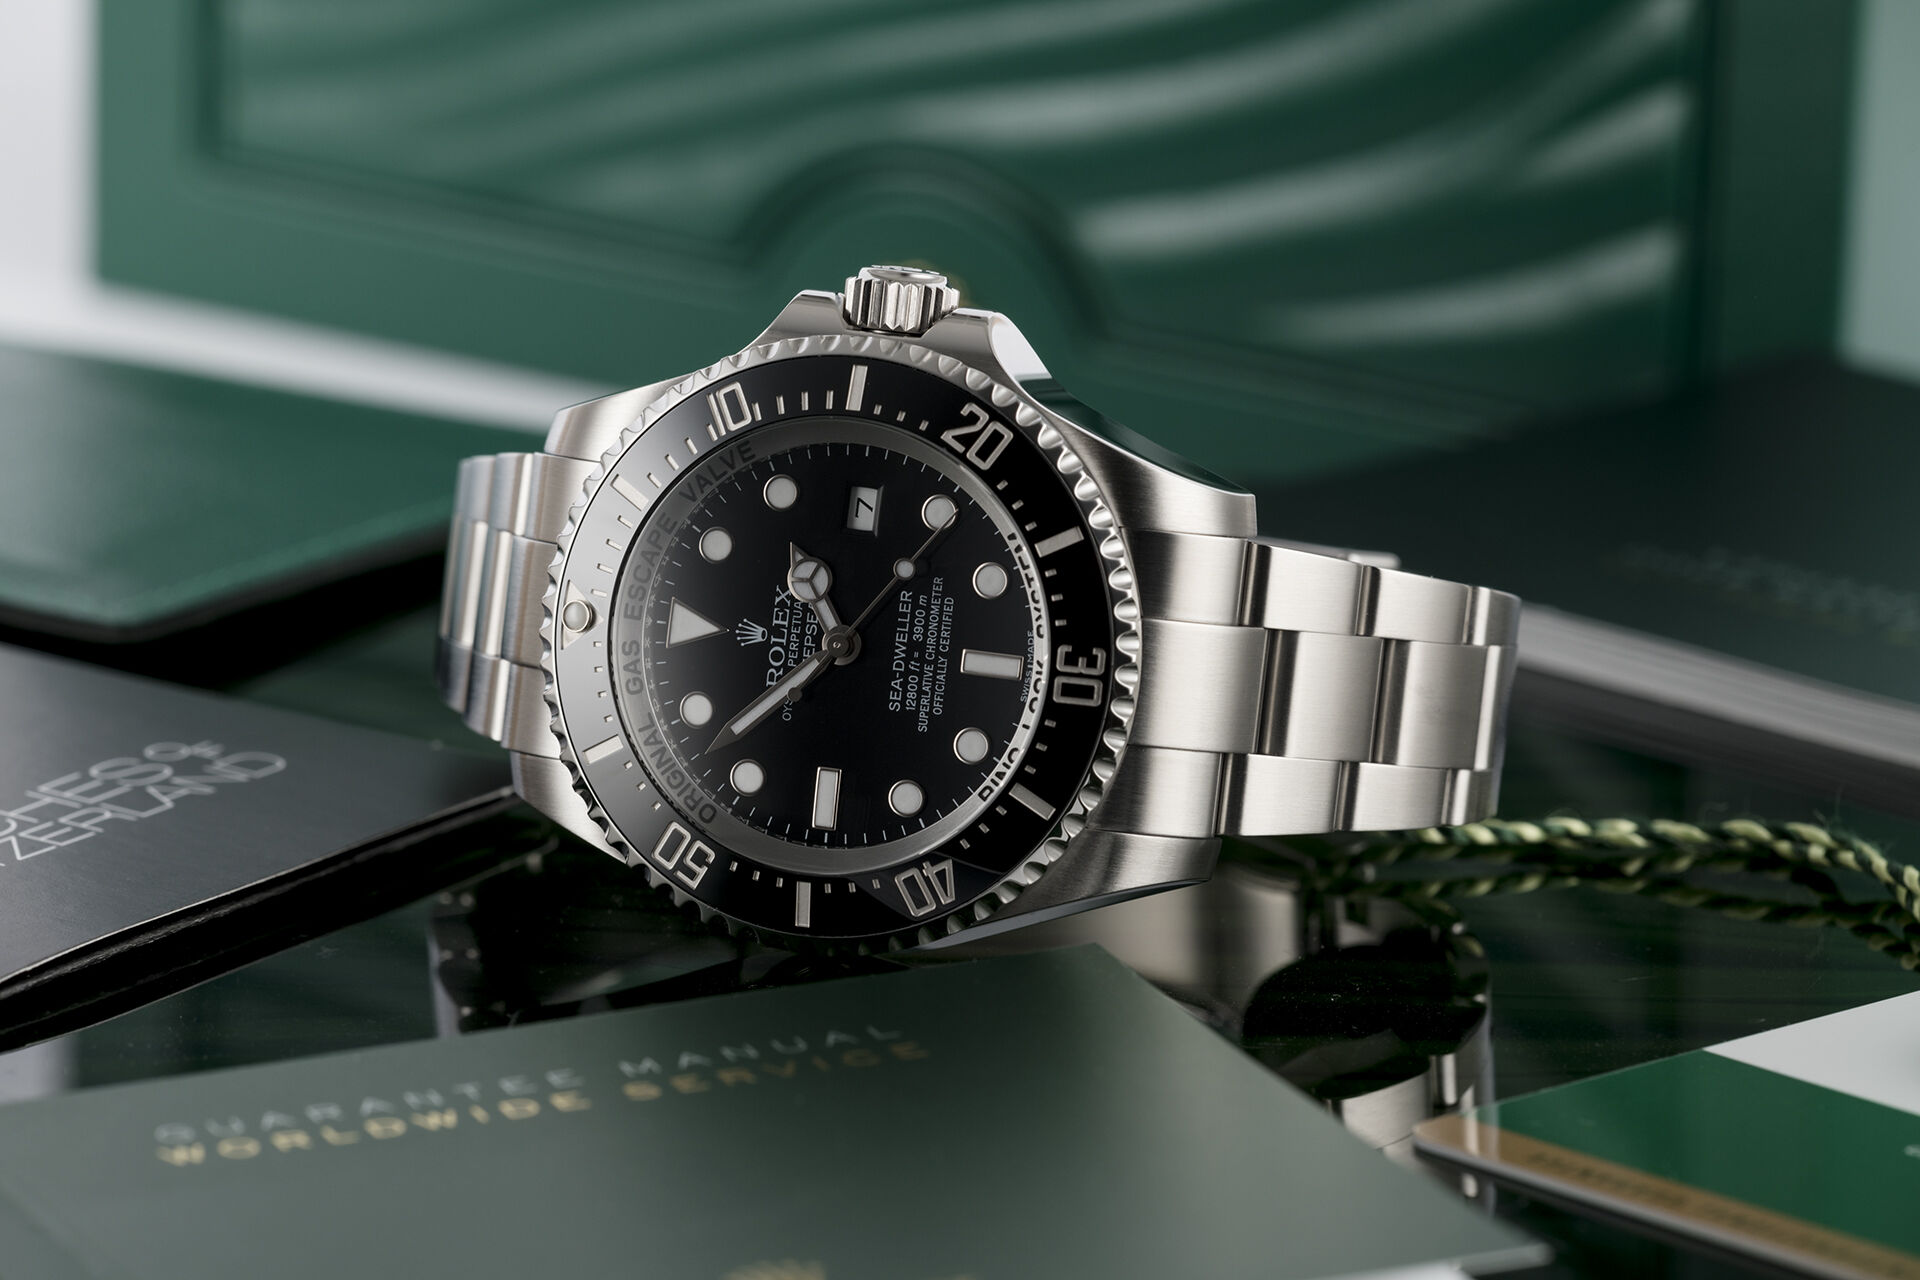 ref 116660 | 'UK Retailed' | Rolex Sea-Dweller Deepsea